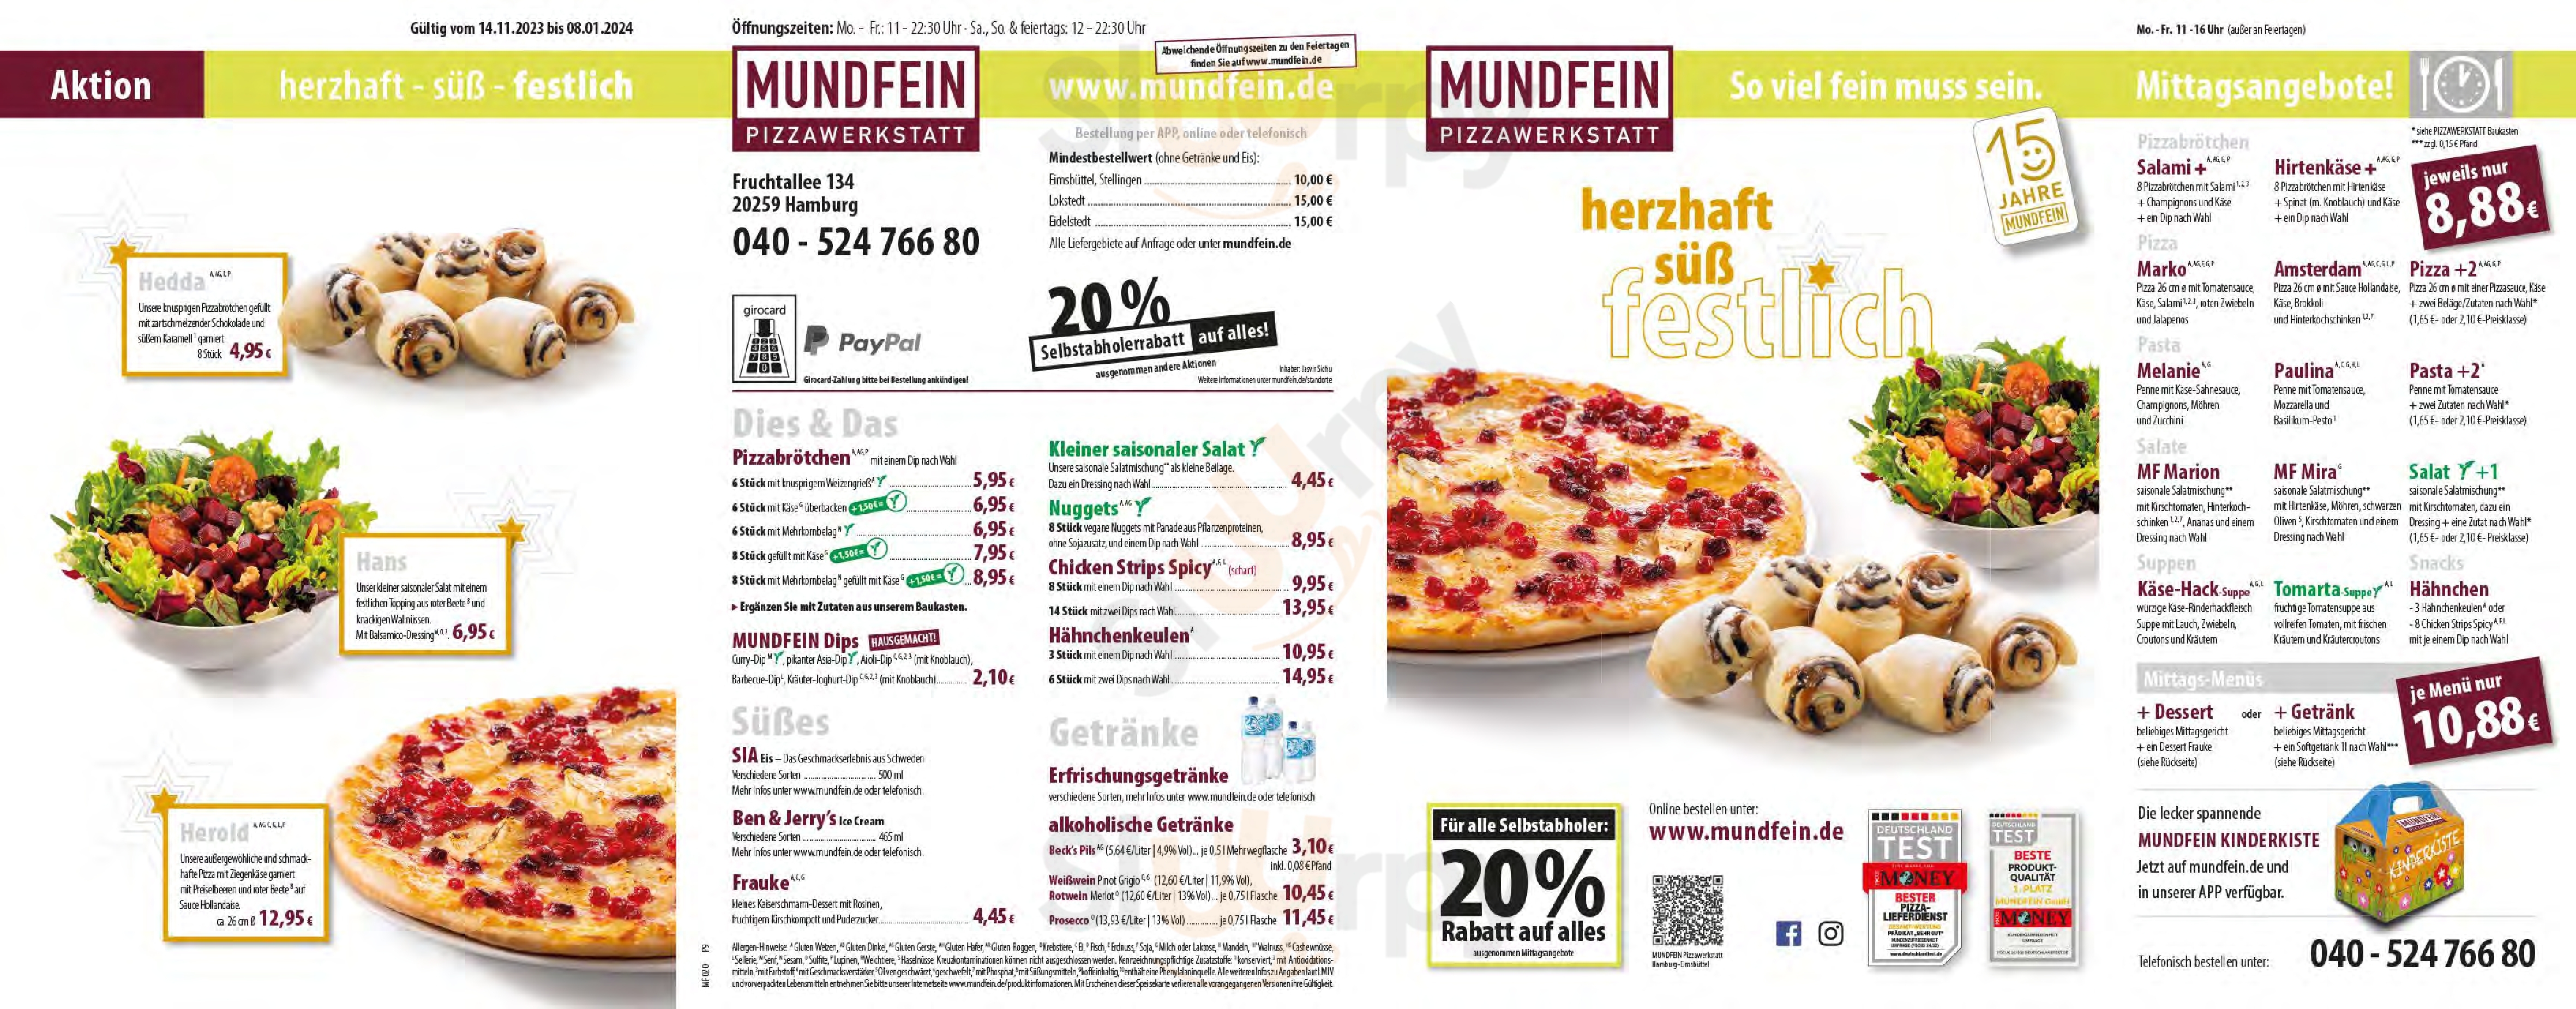 Mundfein Pizzawerkstatt Hamburg-eimsbüttel Hamburg Menu - 1